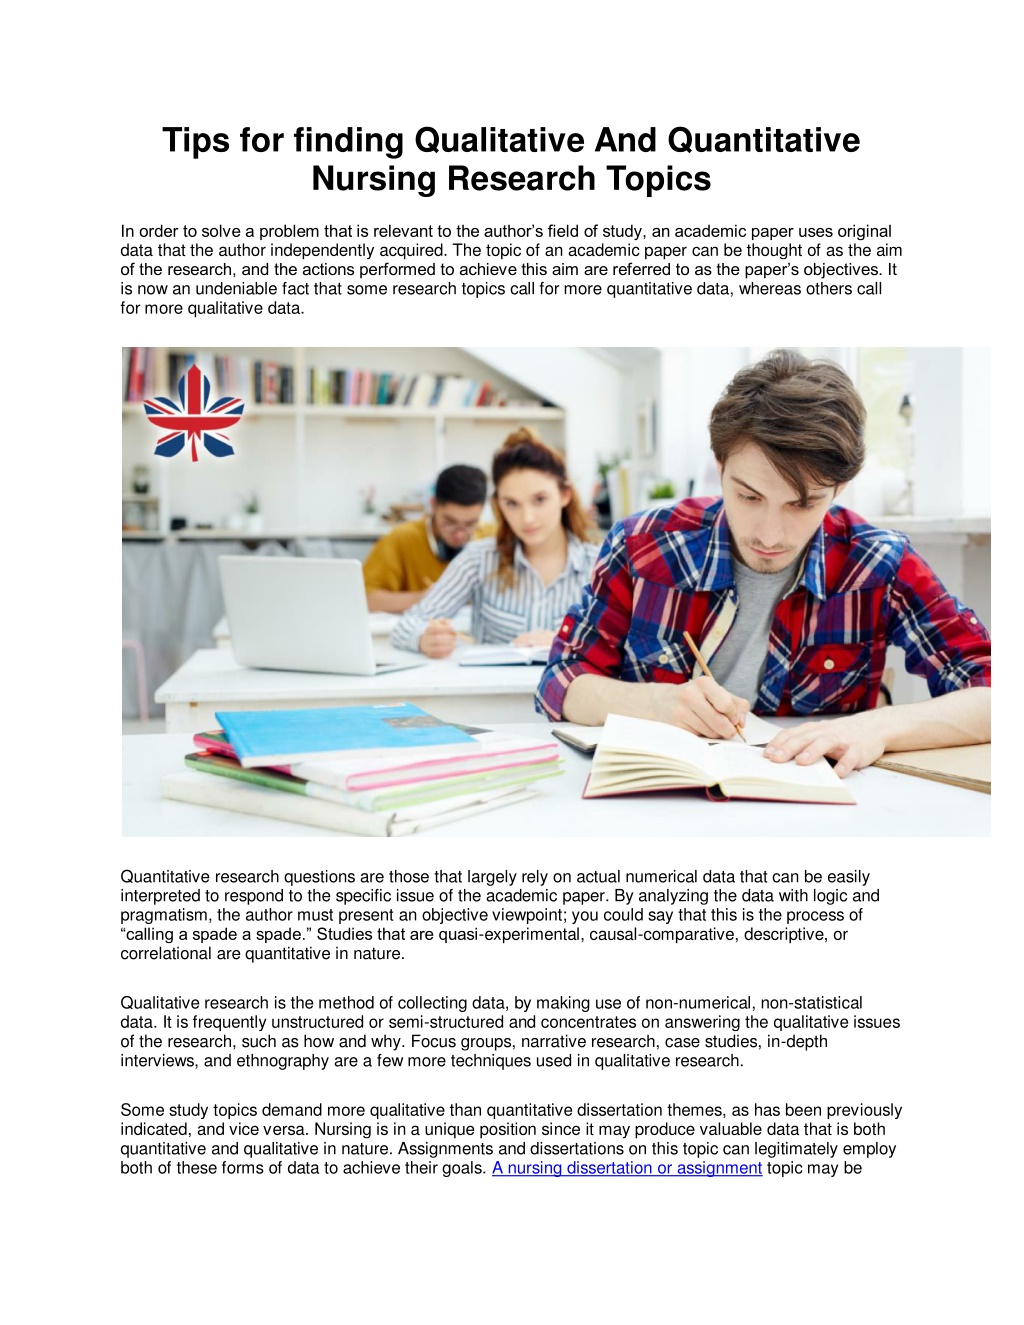 quantitative nursing research articles pdf